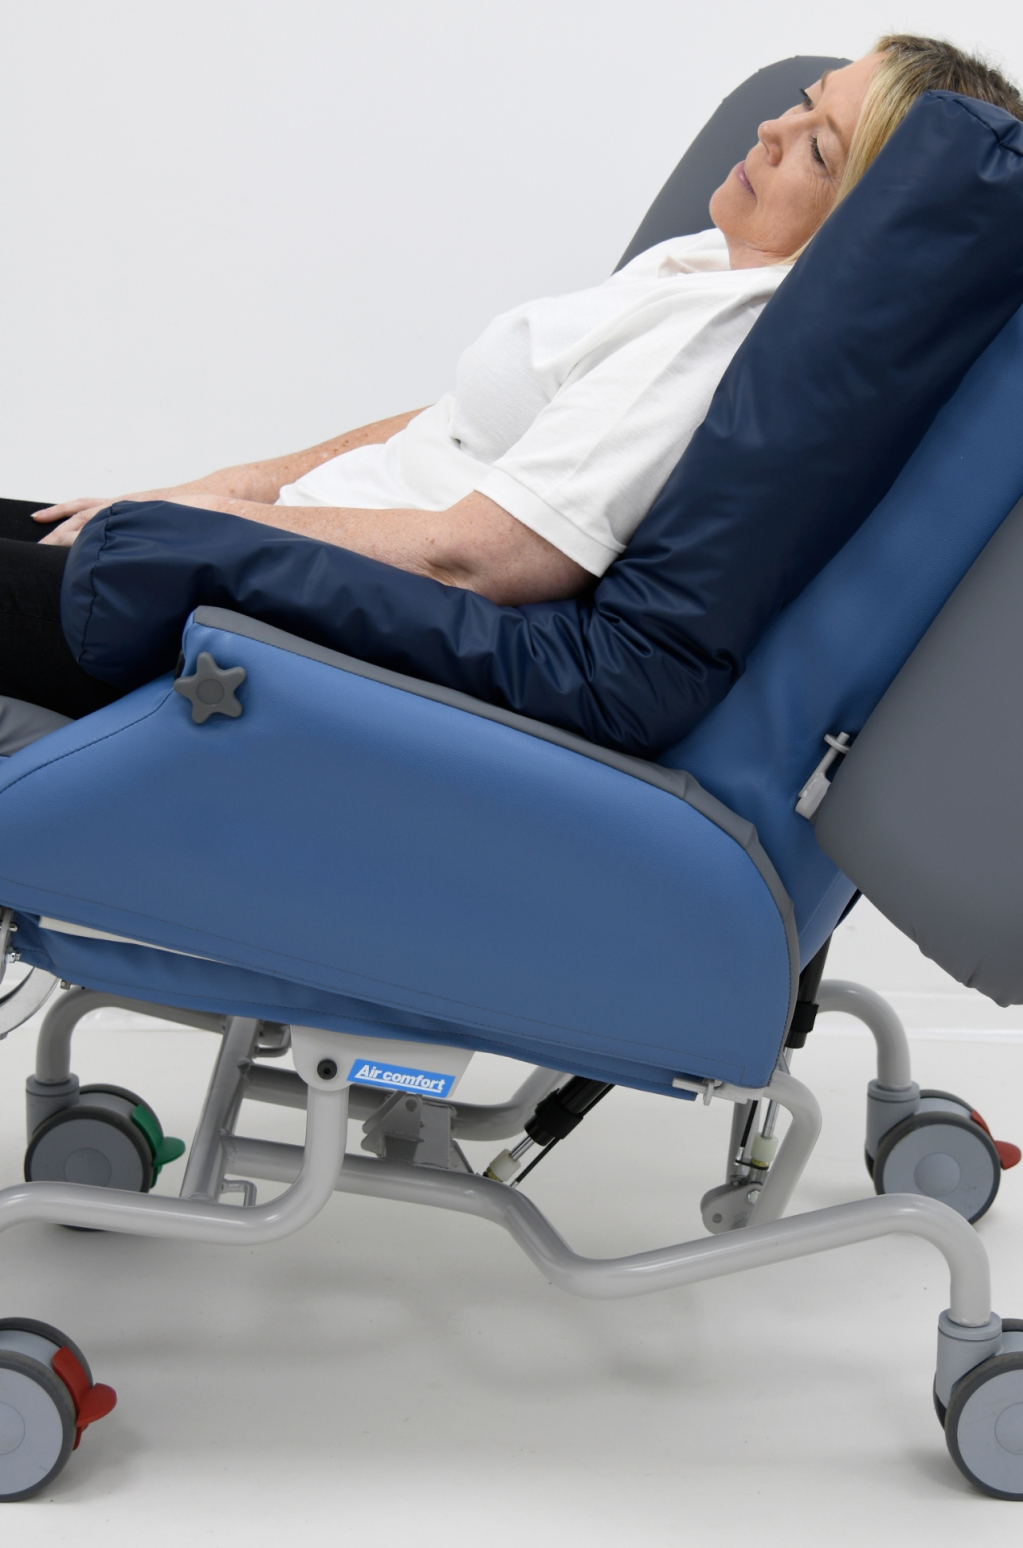 Bolster for Air Comfort Deluxe V2 Chair